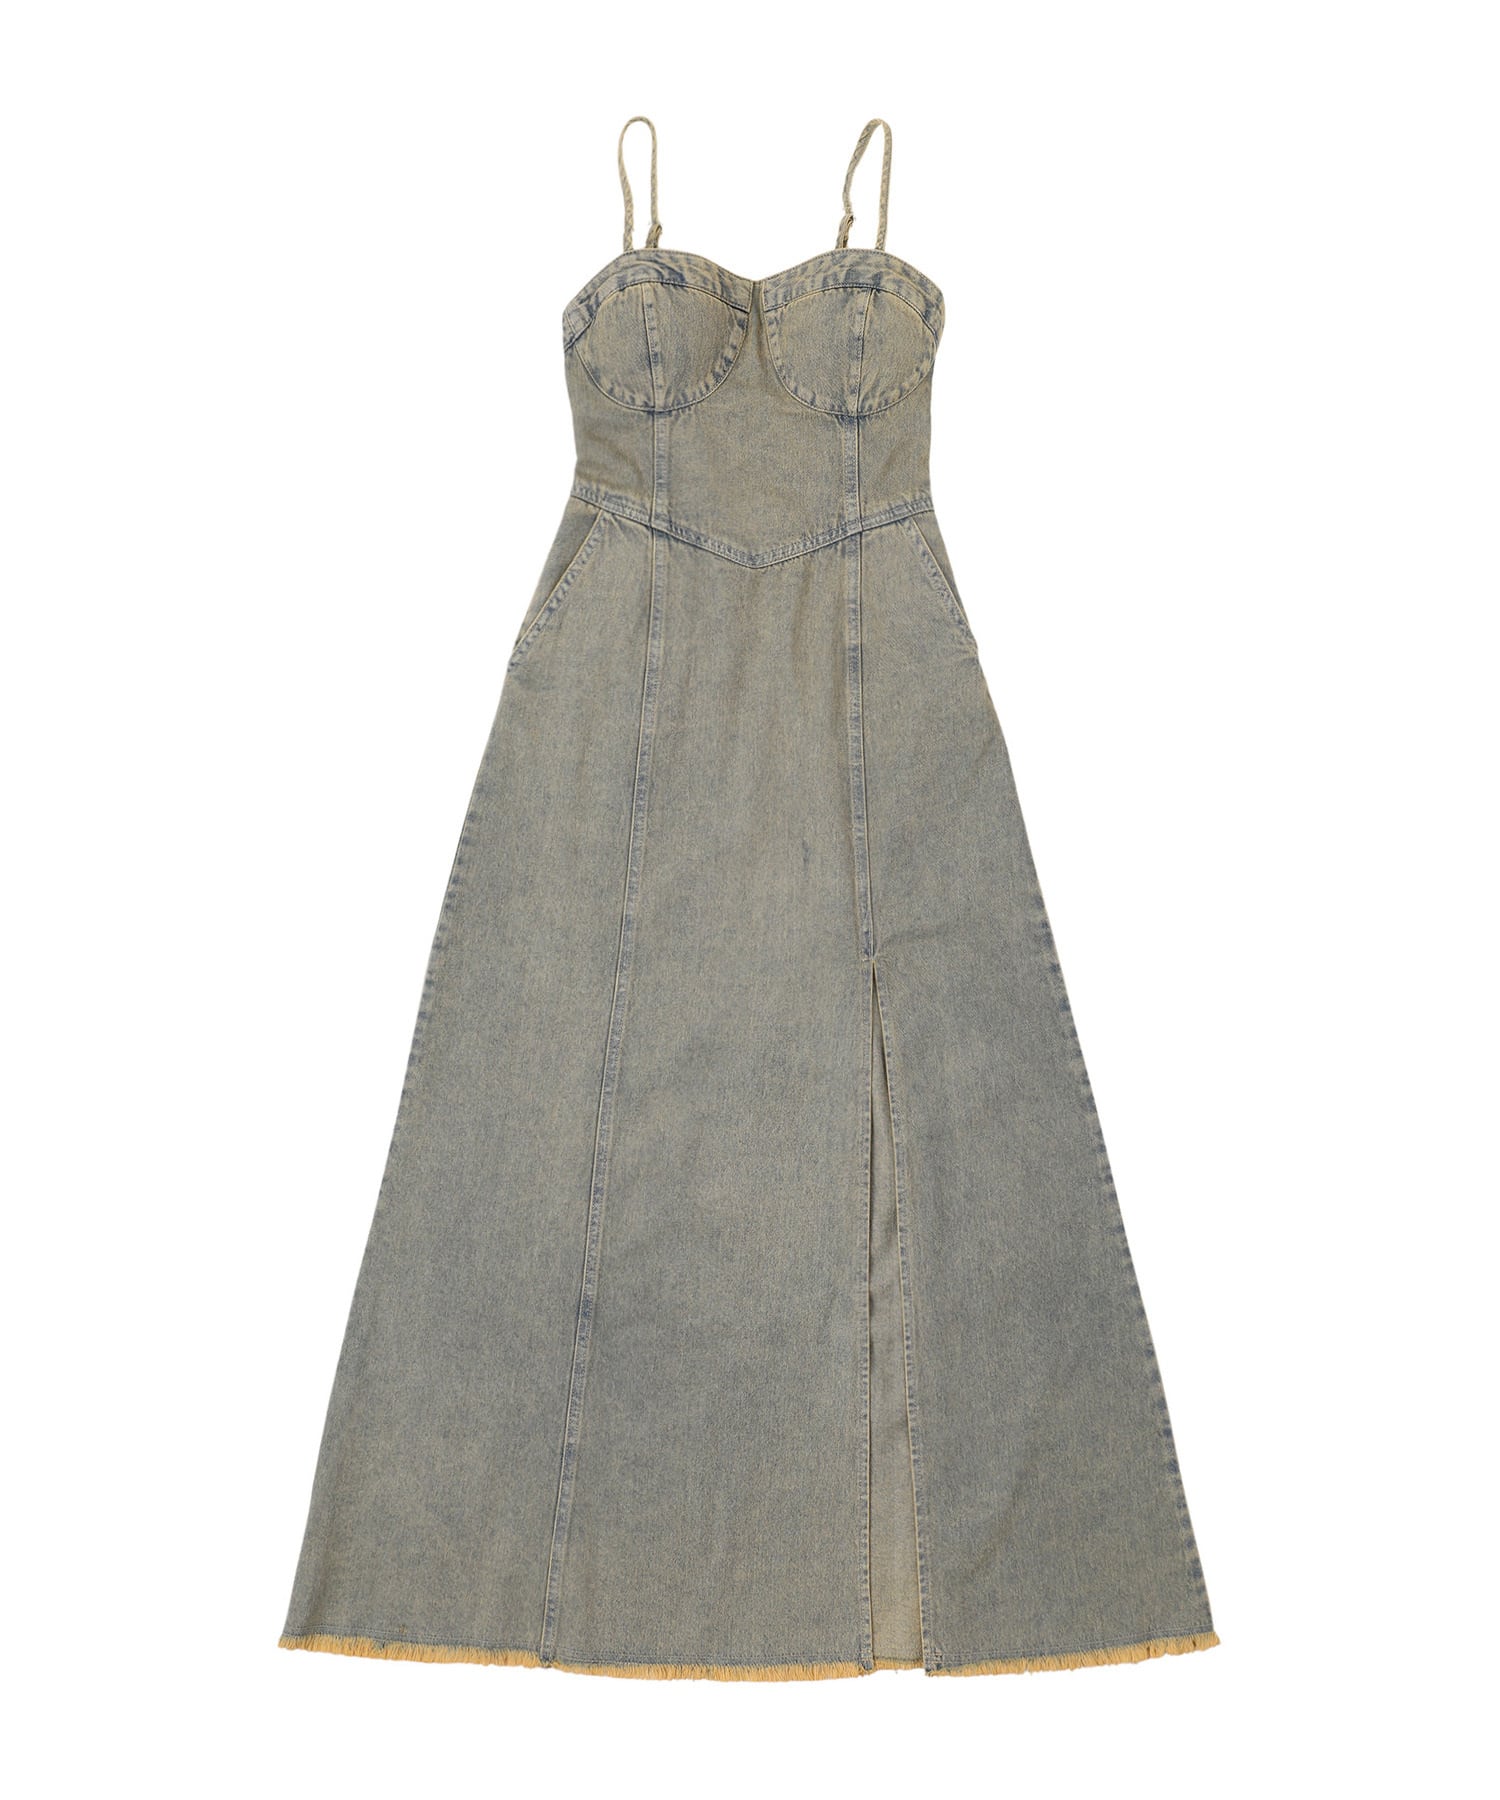 Vintage stitch denim dress